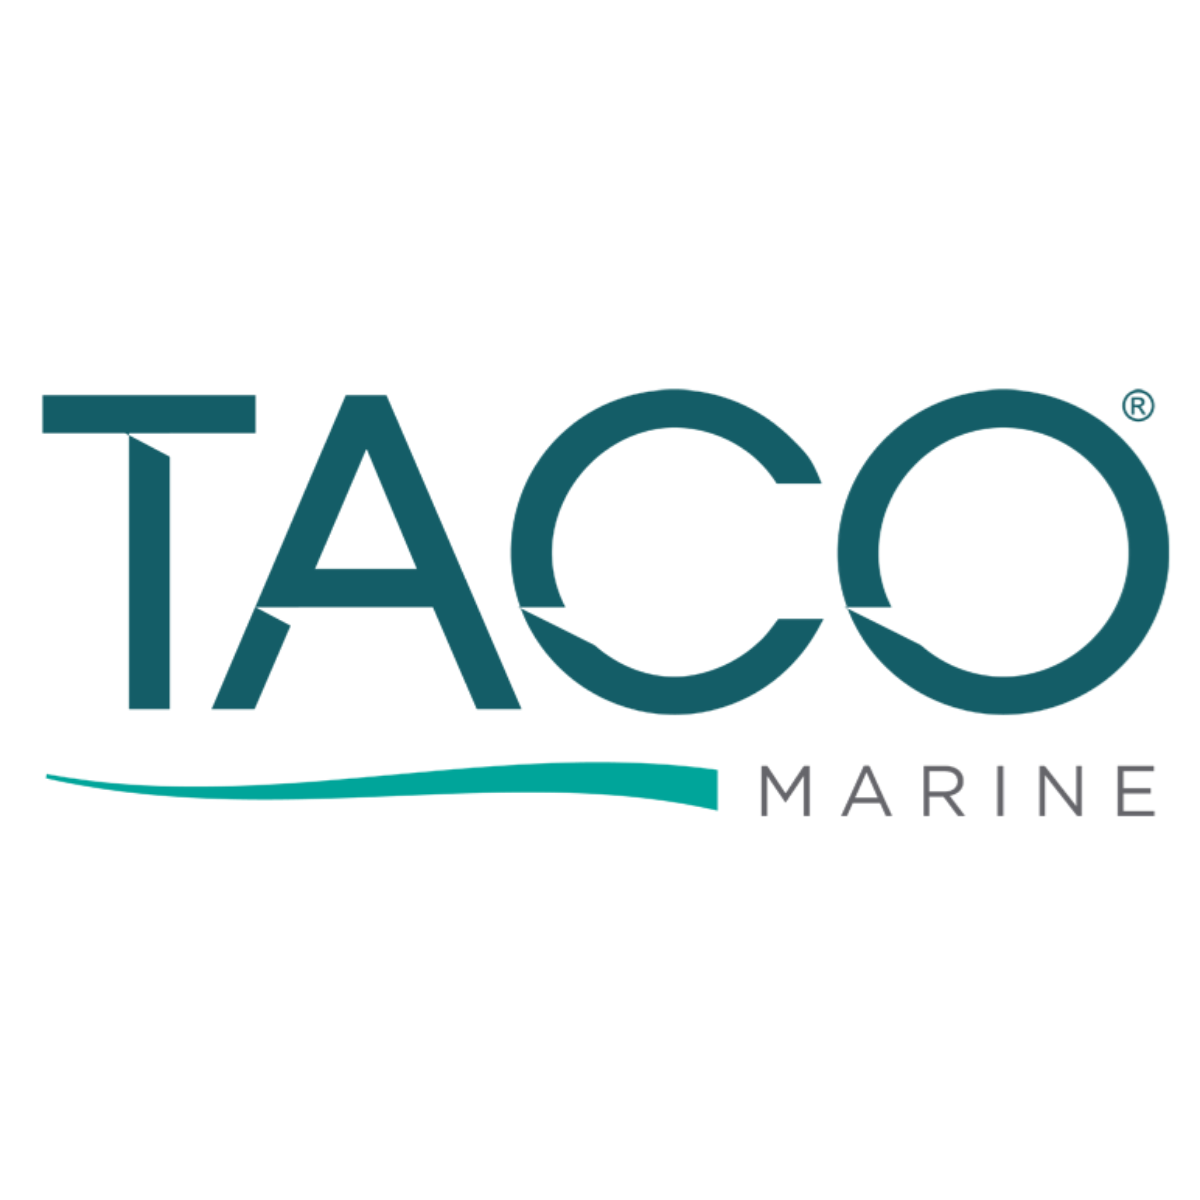 TACO Marine logo square